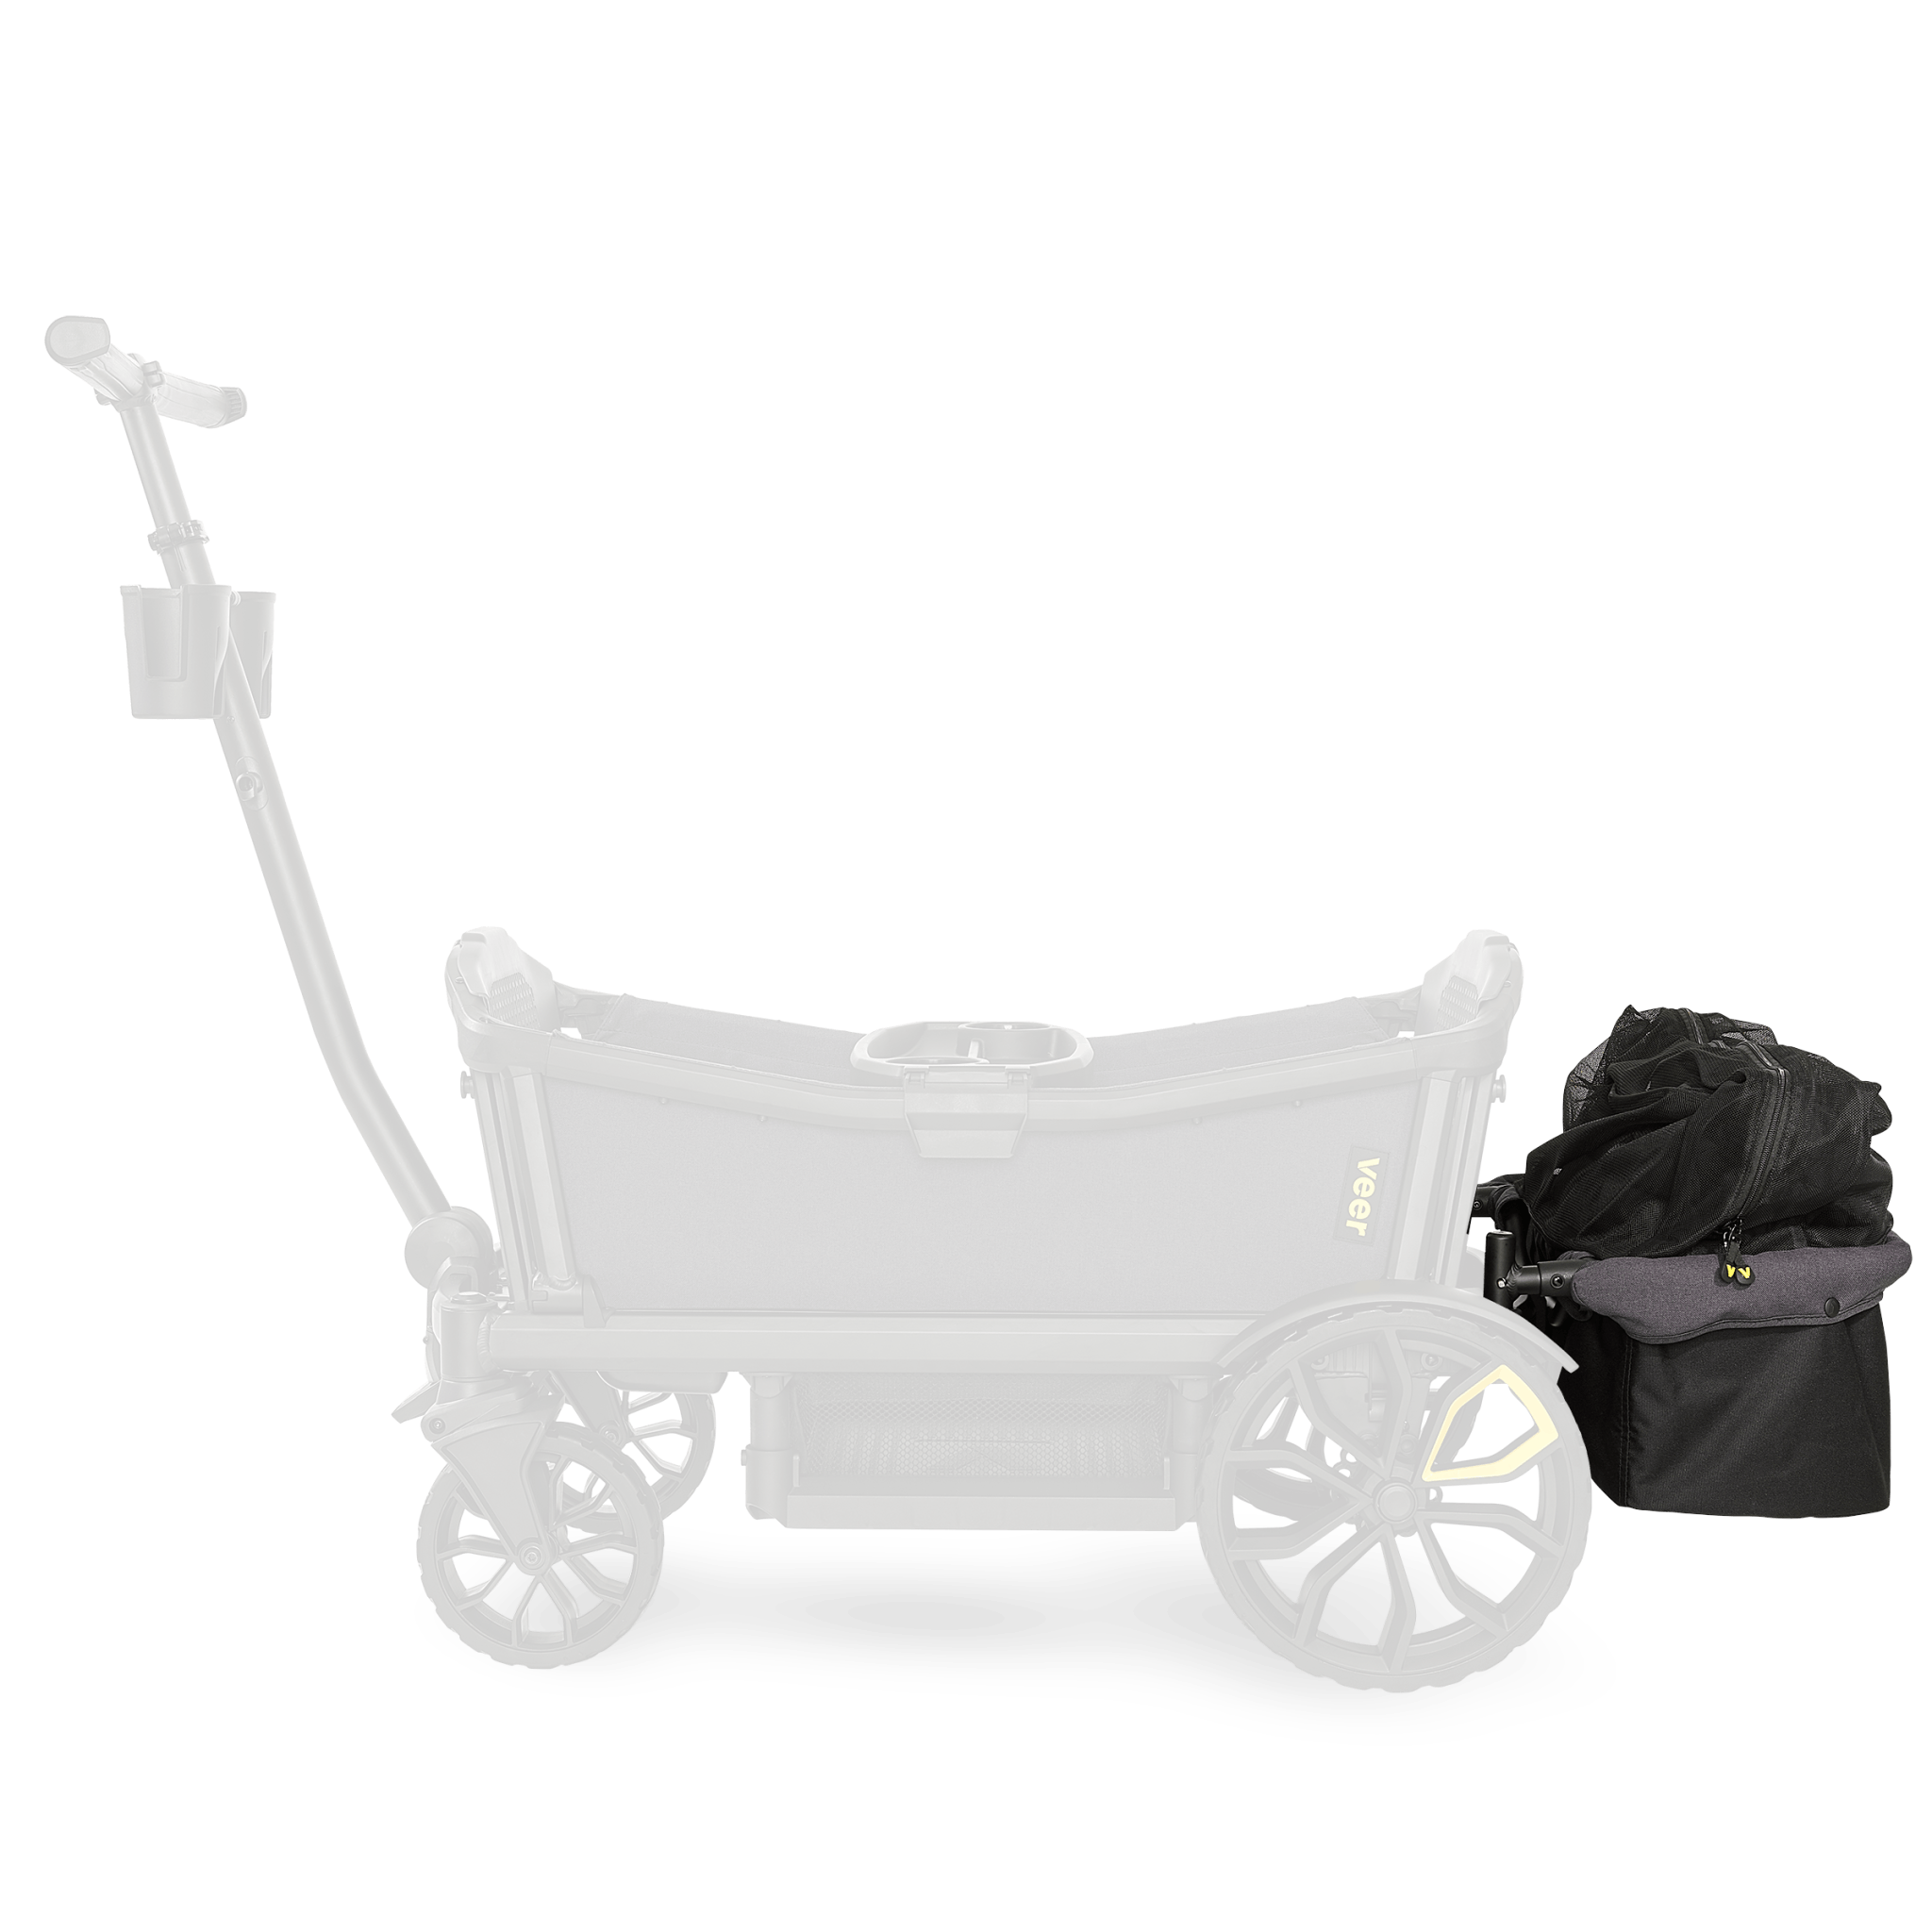 Veer Cruiser Foldable Storage Basket - ANB Baby -all terrain crossover wagon